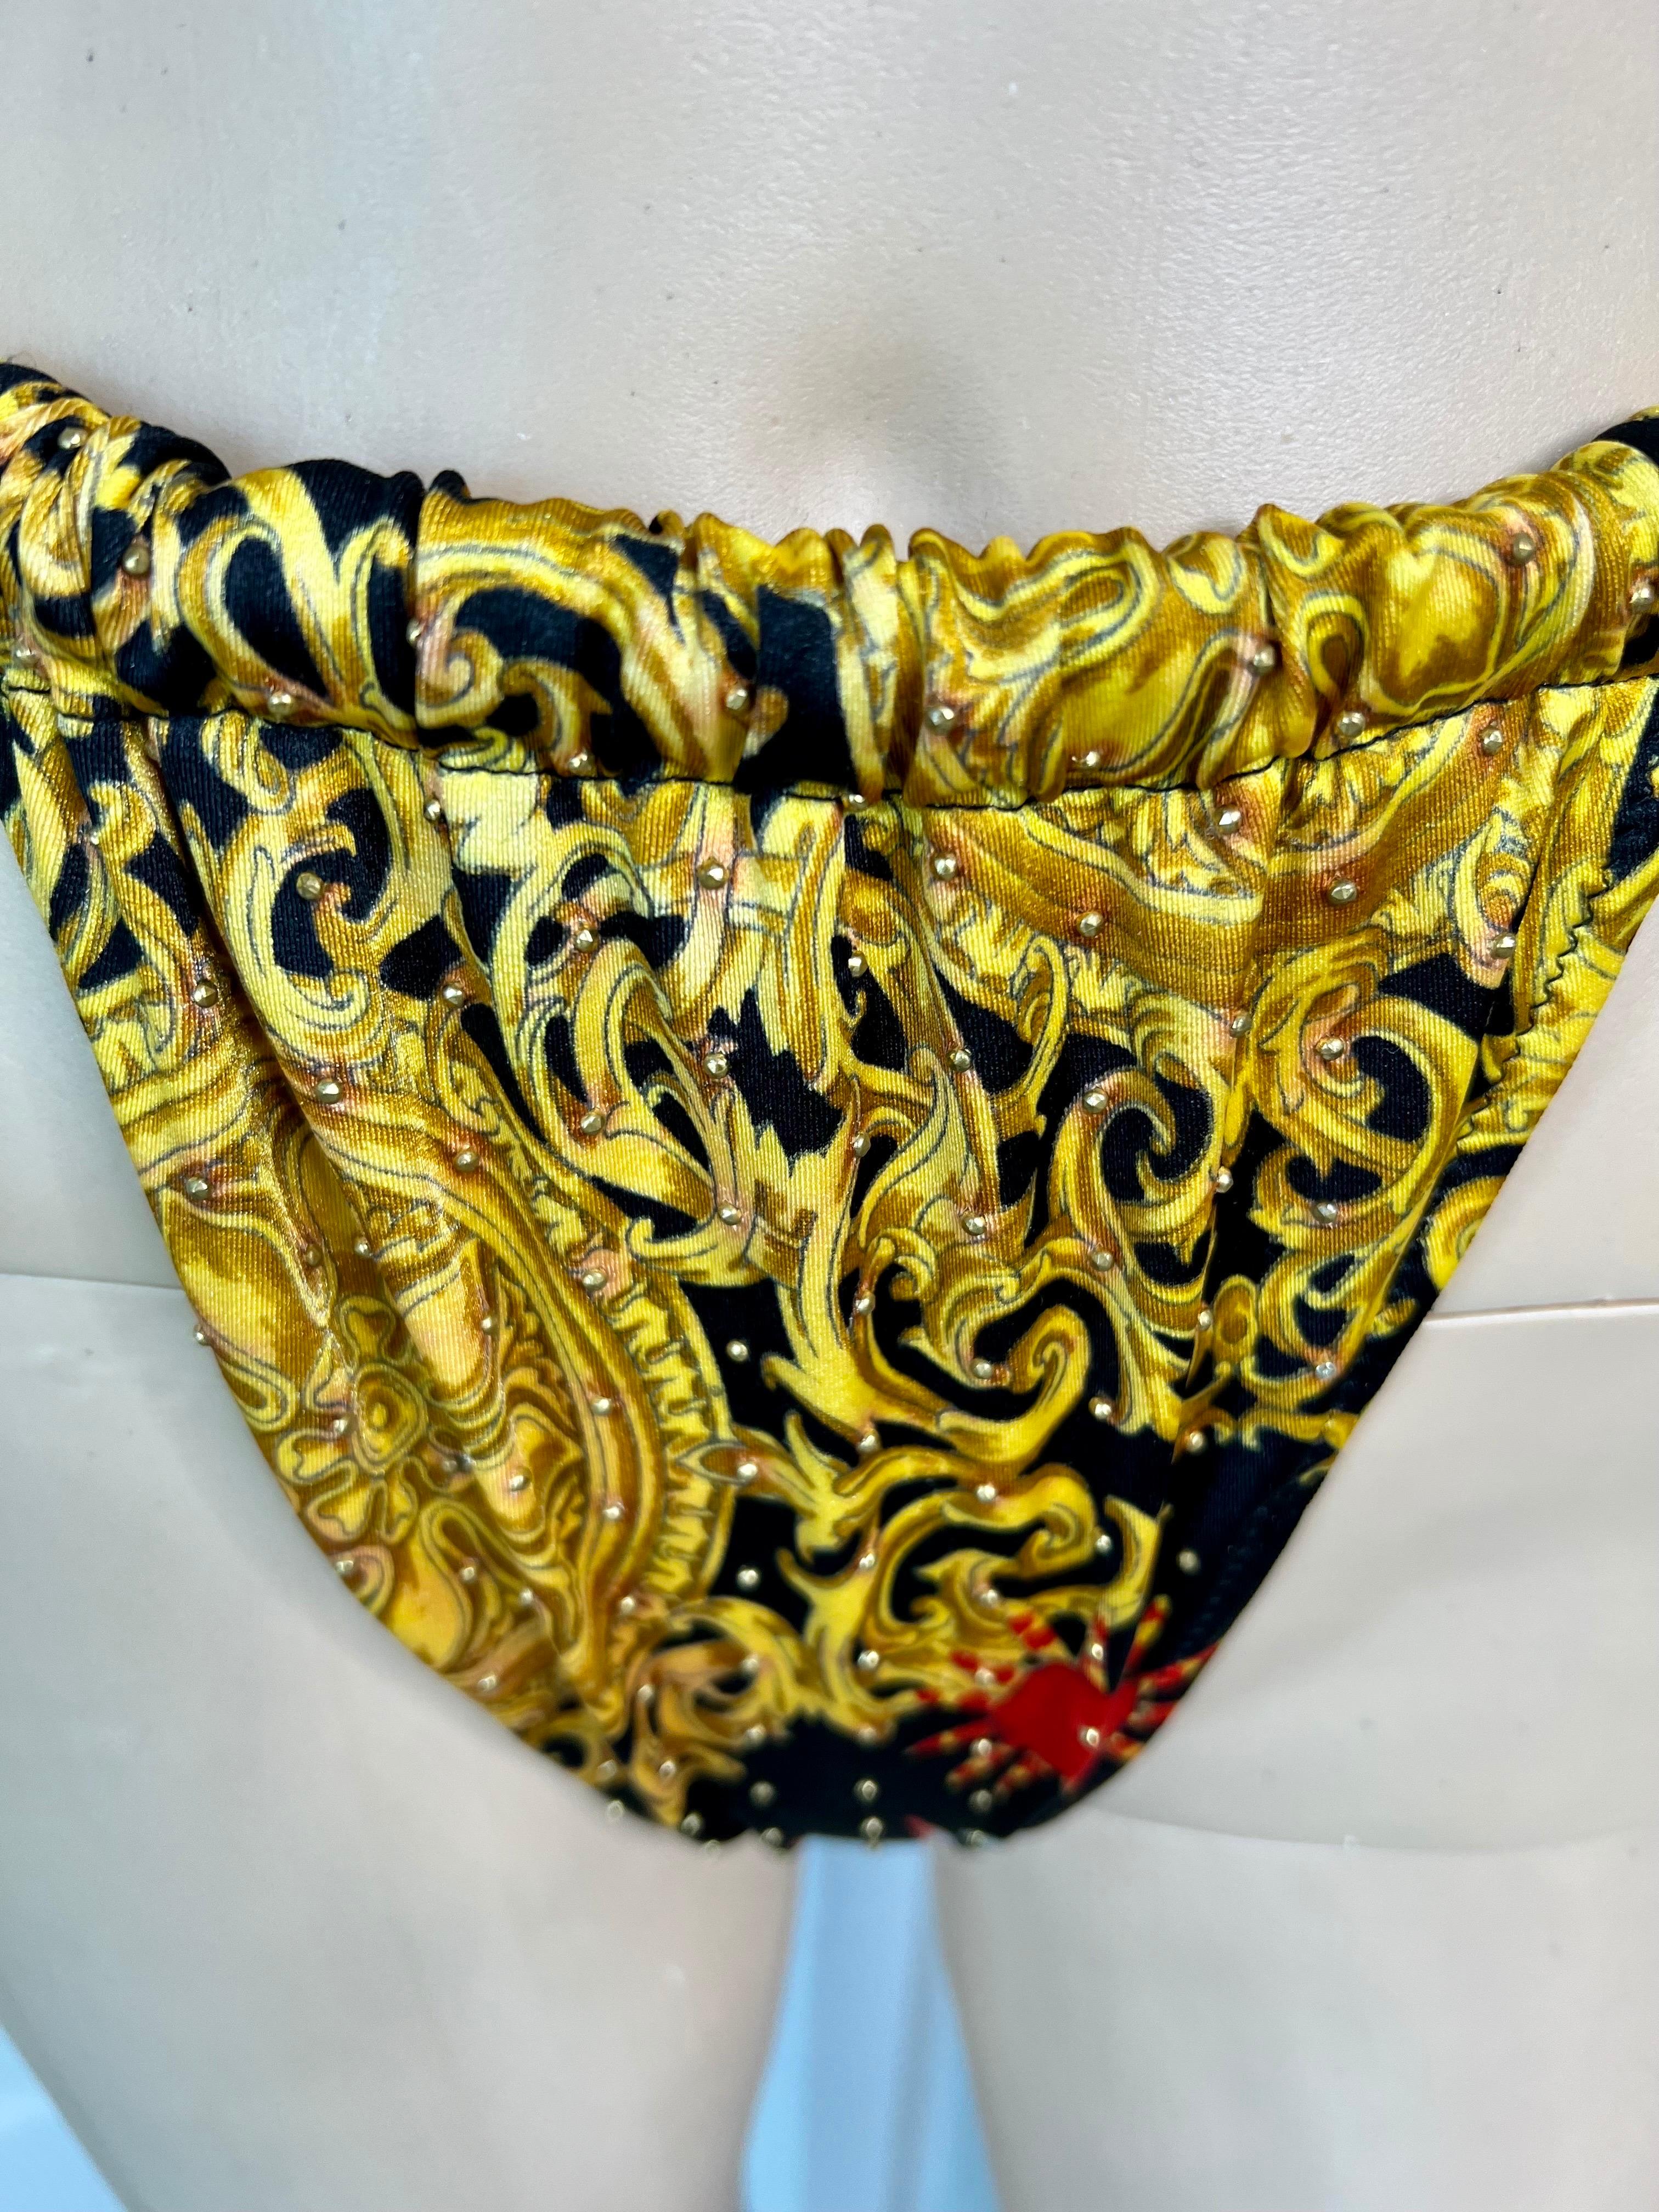 Gianni Versace S/S 1992 Baroque Embellished Two-Piece Bikini Swimsuit Swimwear For Sale 6